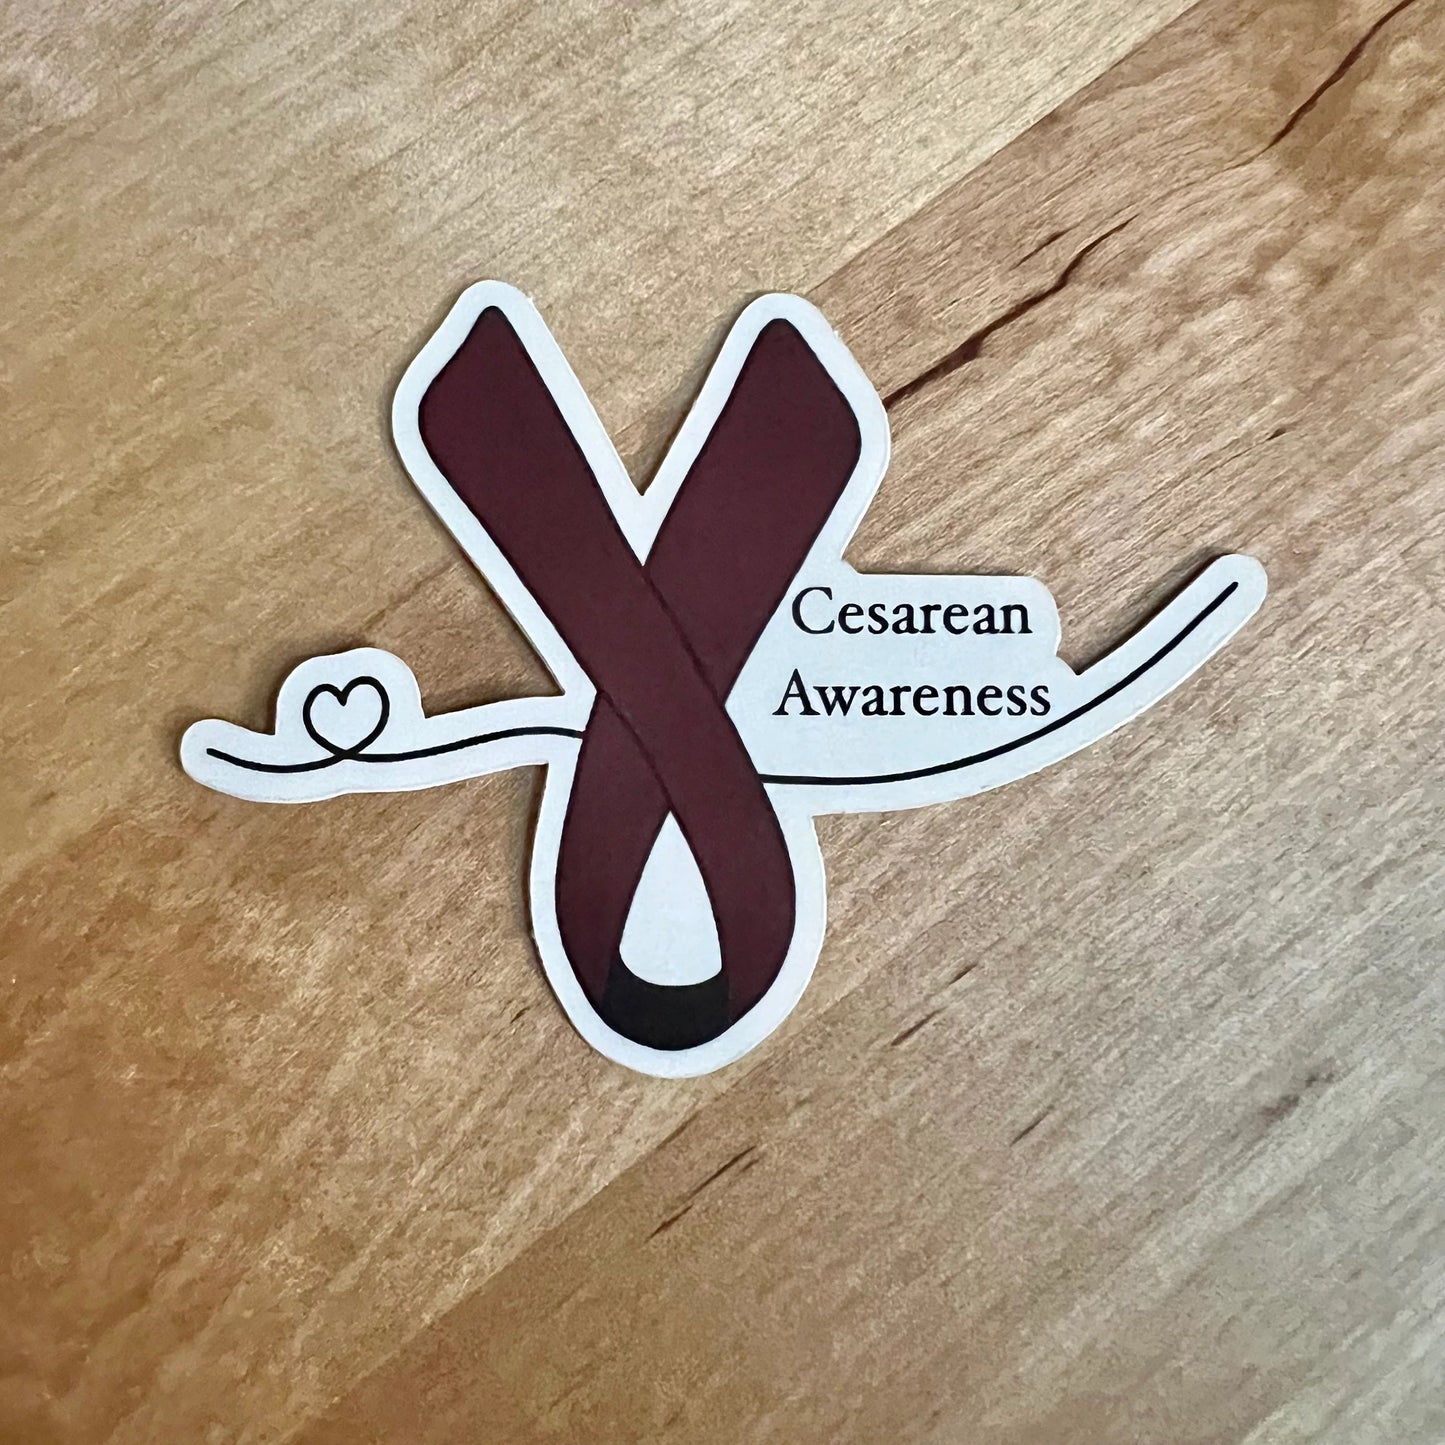 Cesarean Awareness Sticker